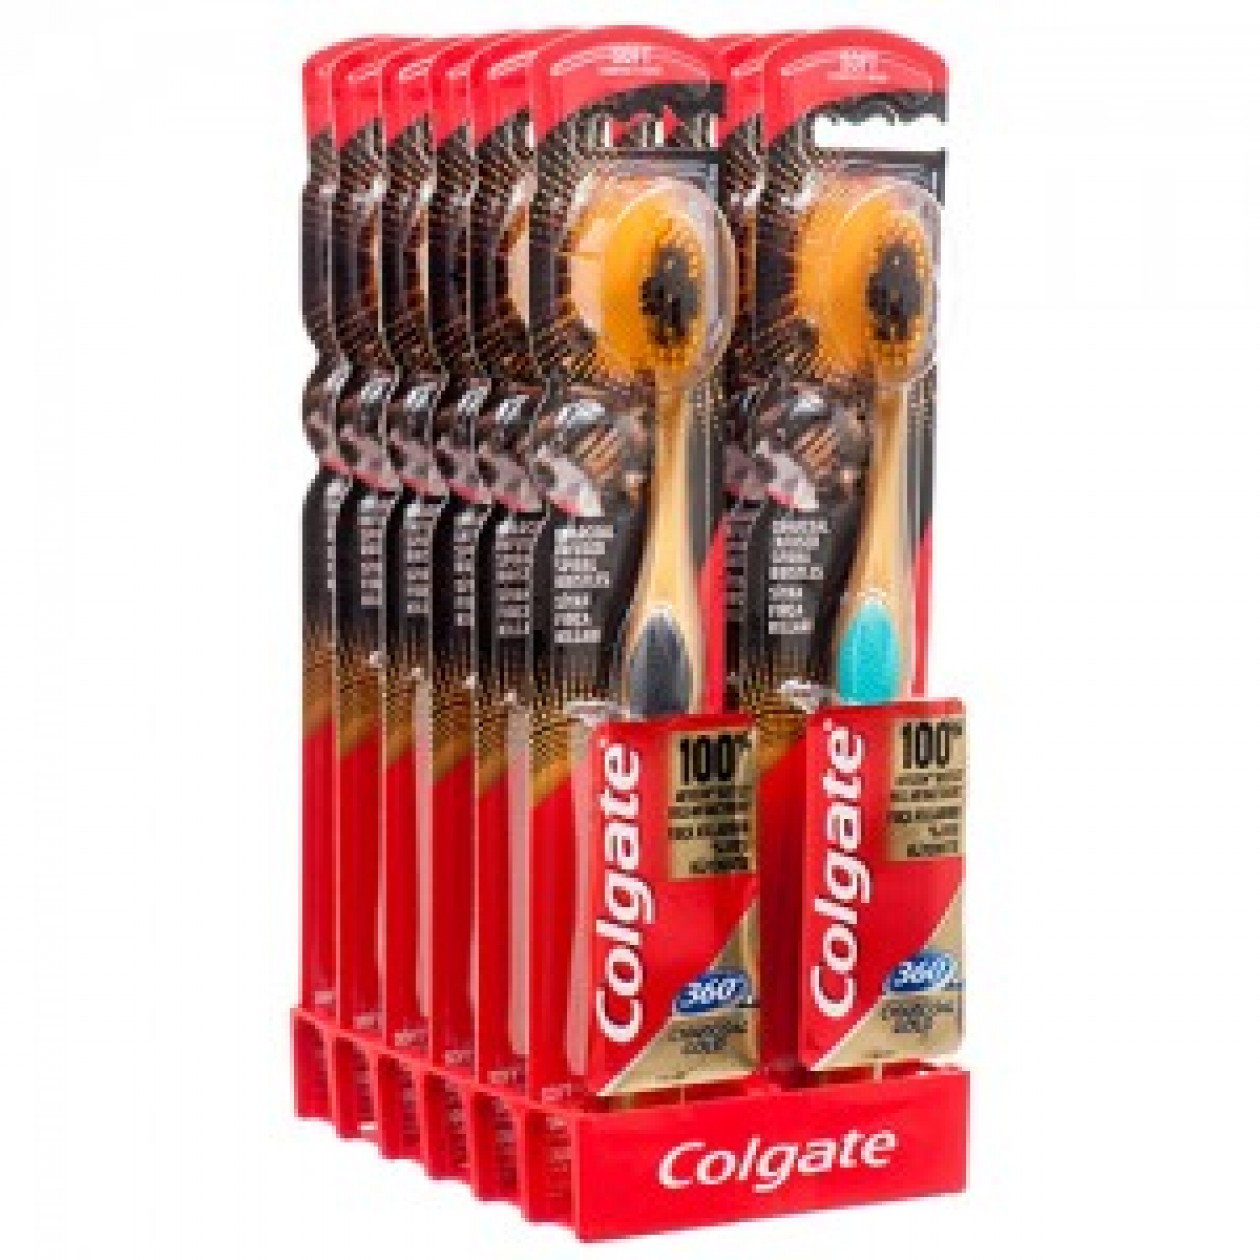 Colgate Toothbrush 360 Charcoal Gold Medium